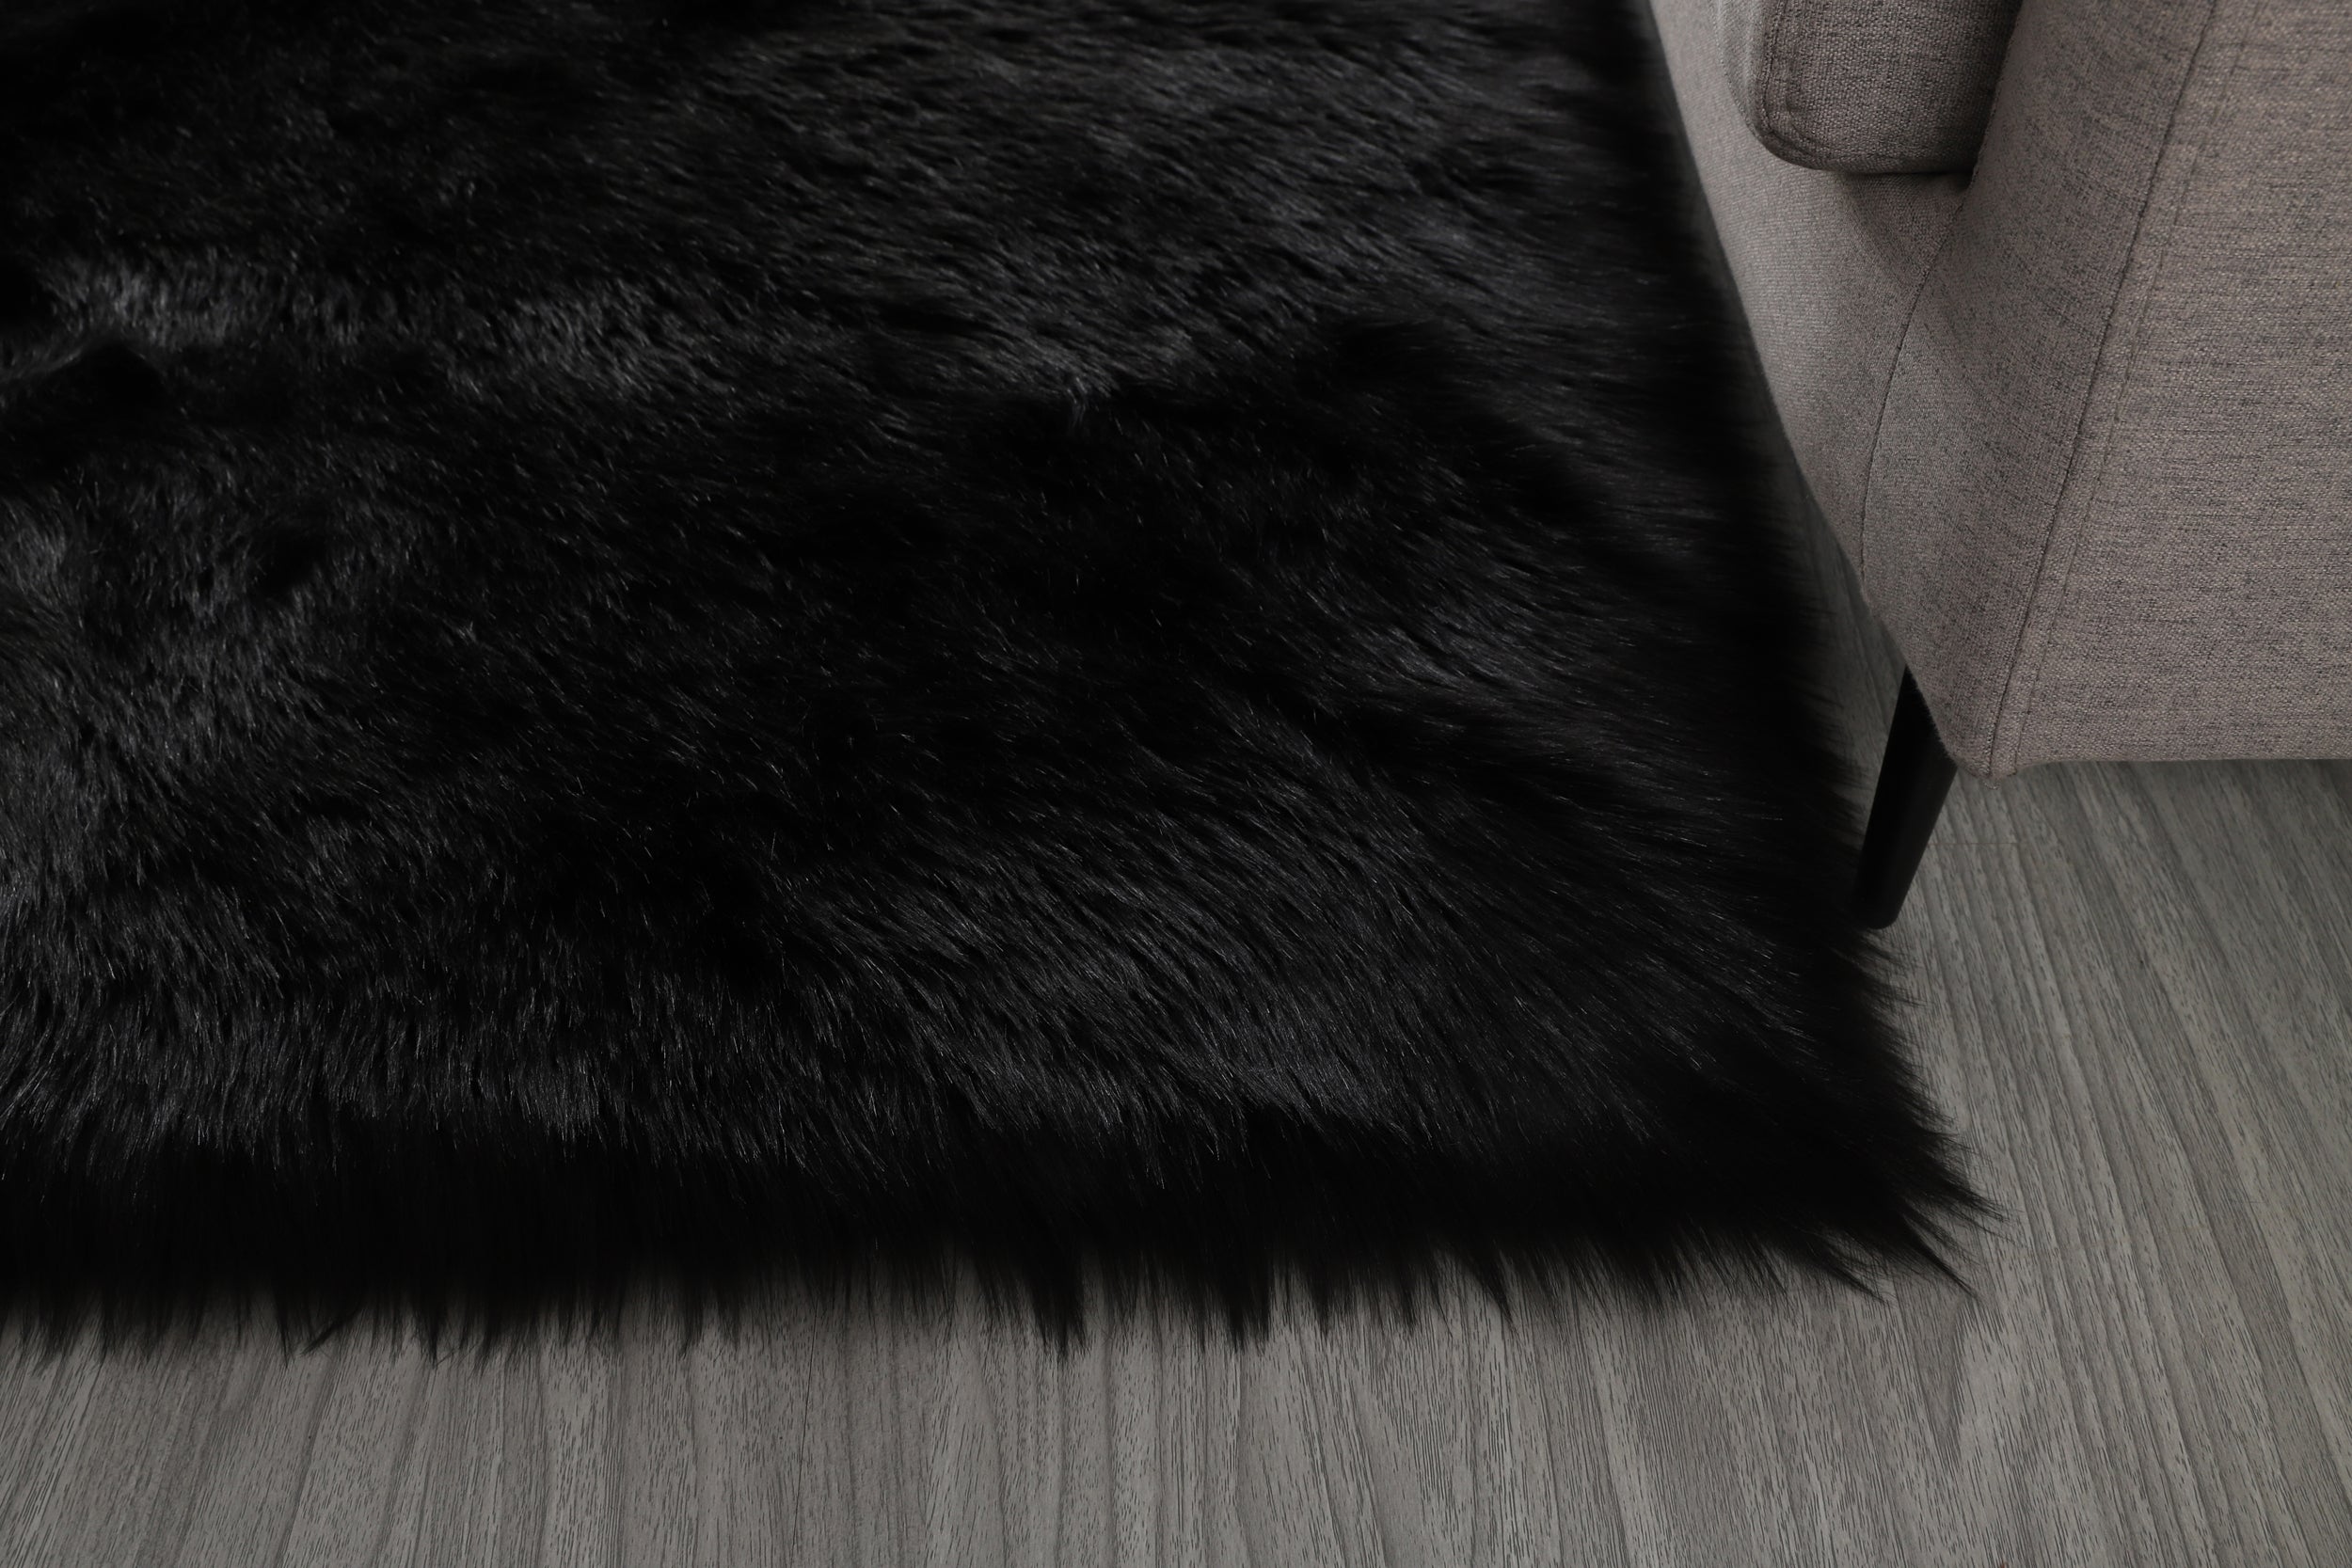 7' x 5' Cozy Collection Ultra Soft Fluffy Faux Fur Sheepskin Area Rug (Black)